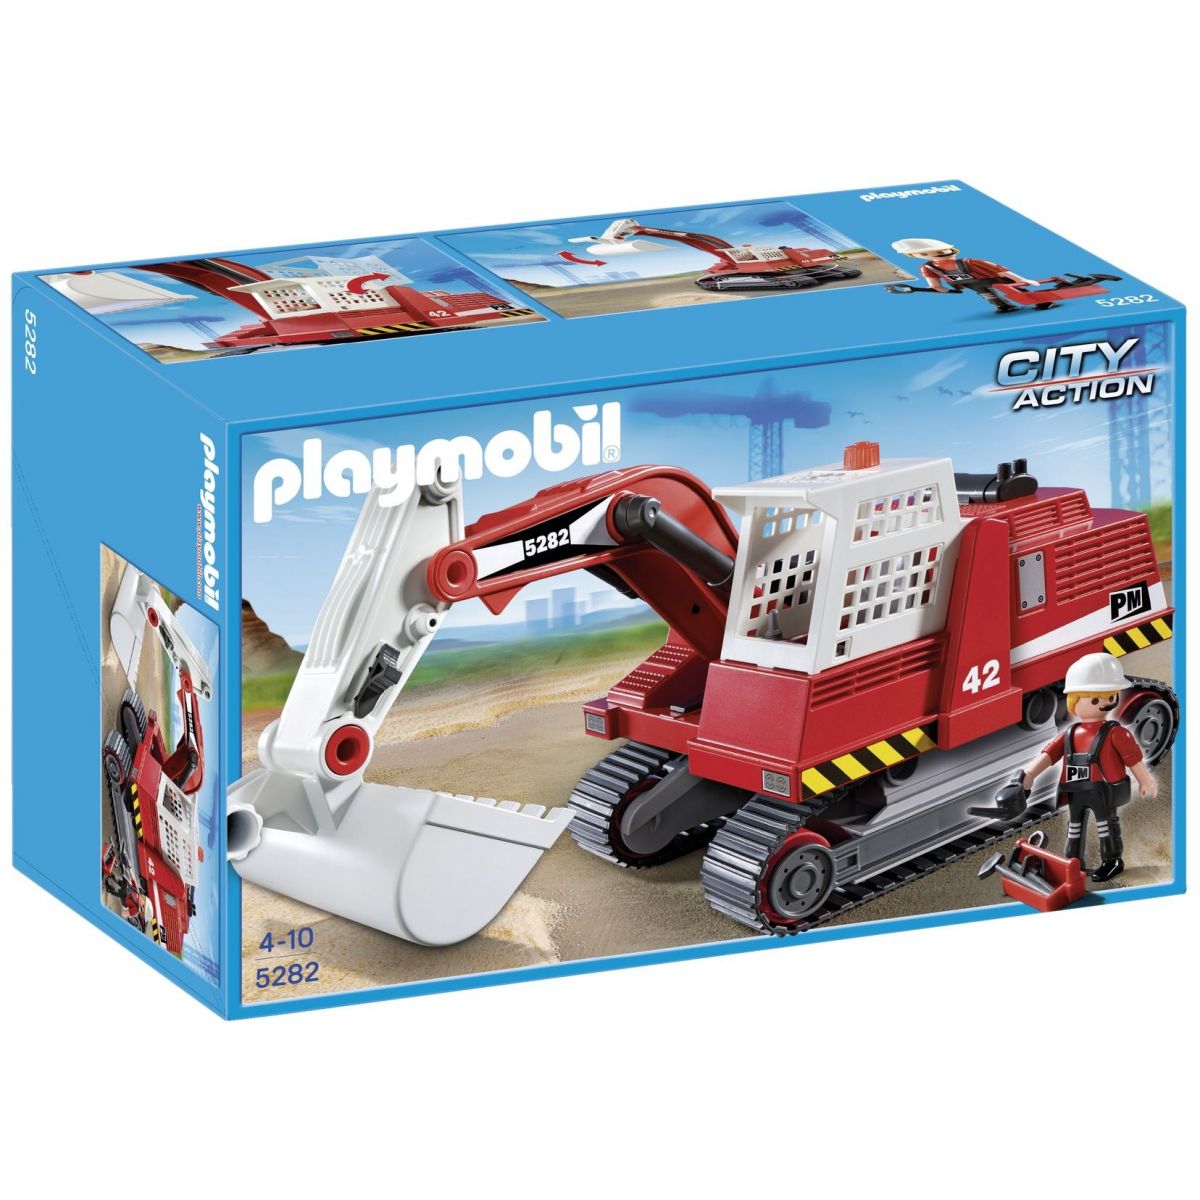 Playmobil 5282 - Construction Excavator